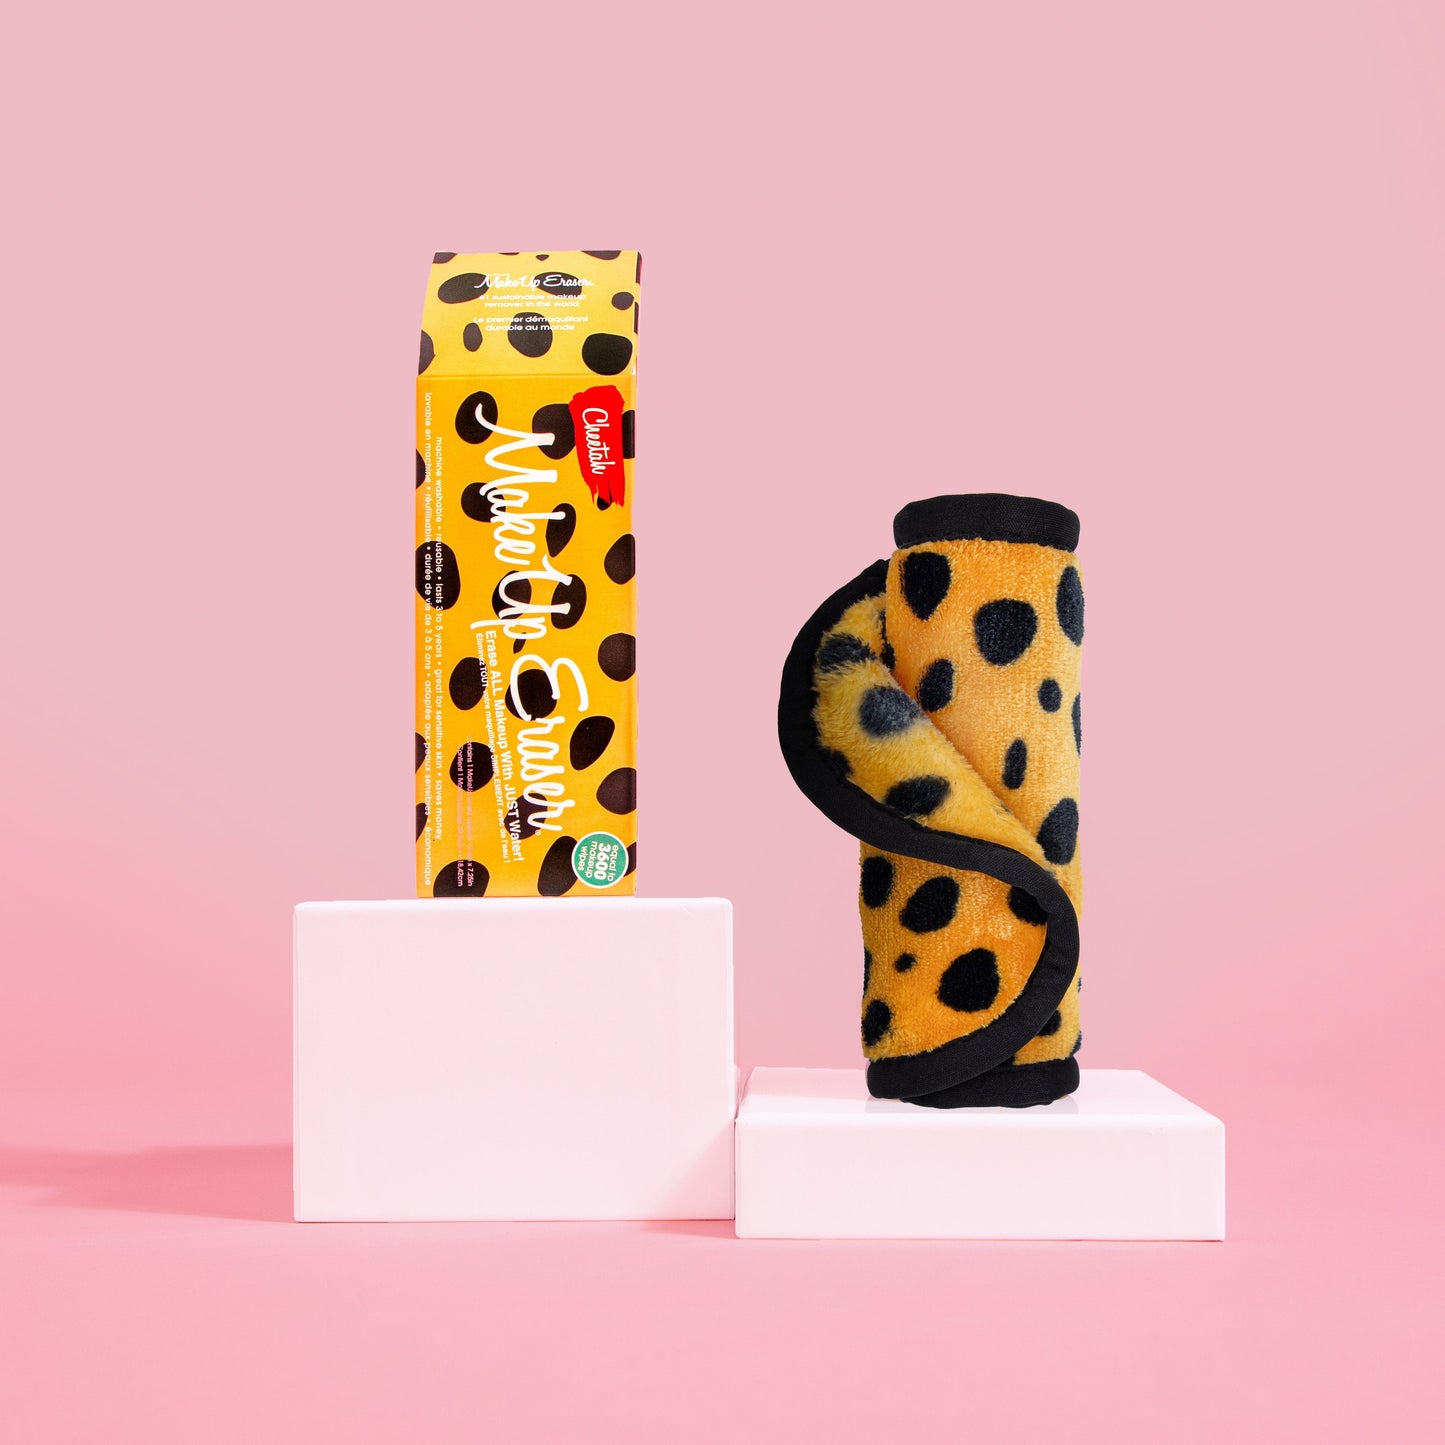 Rolled up Cheetah Print MakeUp Eraser next to packaging, both propped up on platforms.